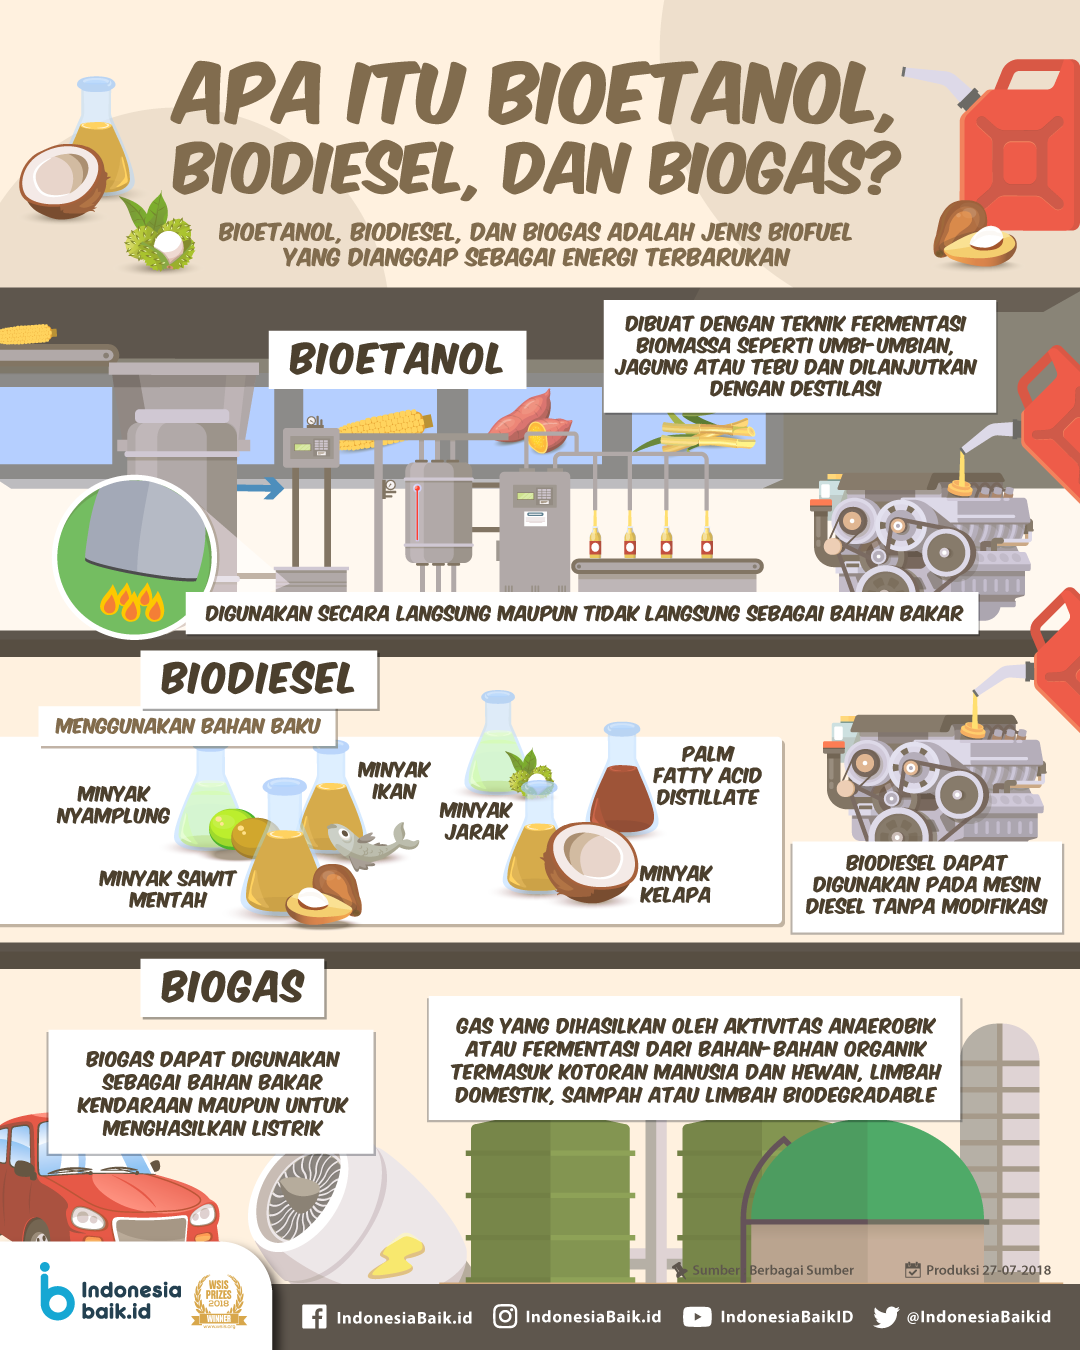 Energi biomassa yang langsung dapat digunakan berbentuk